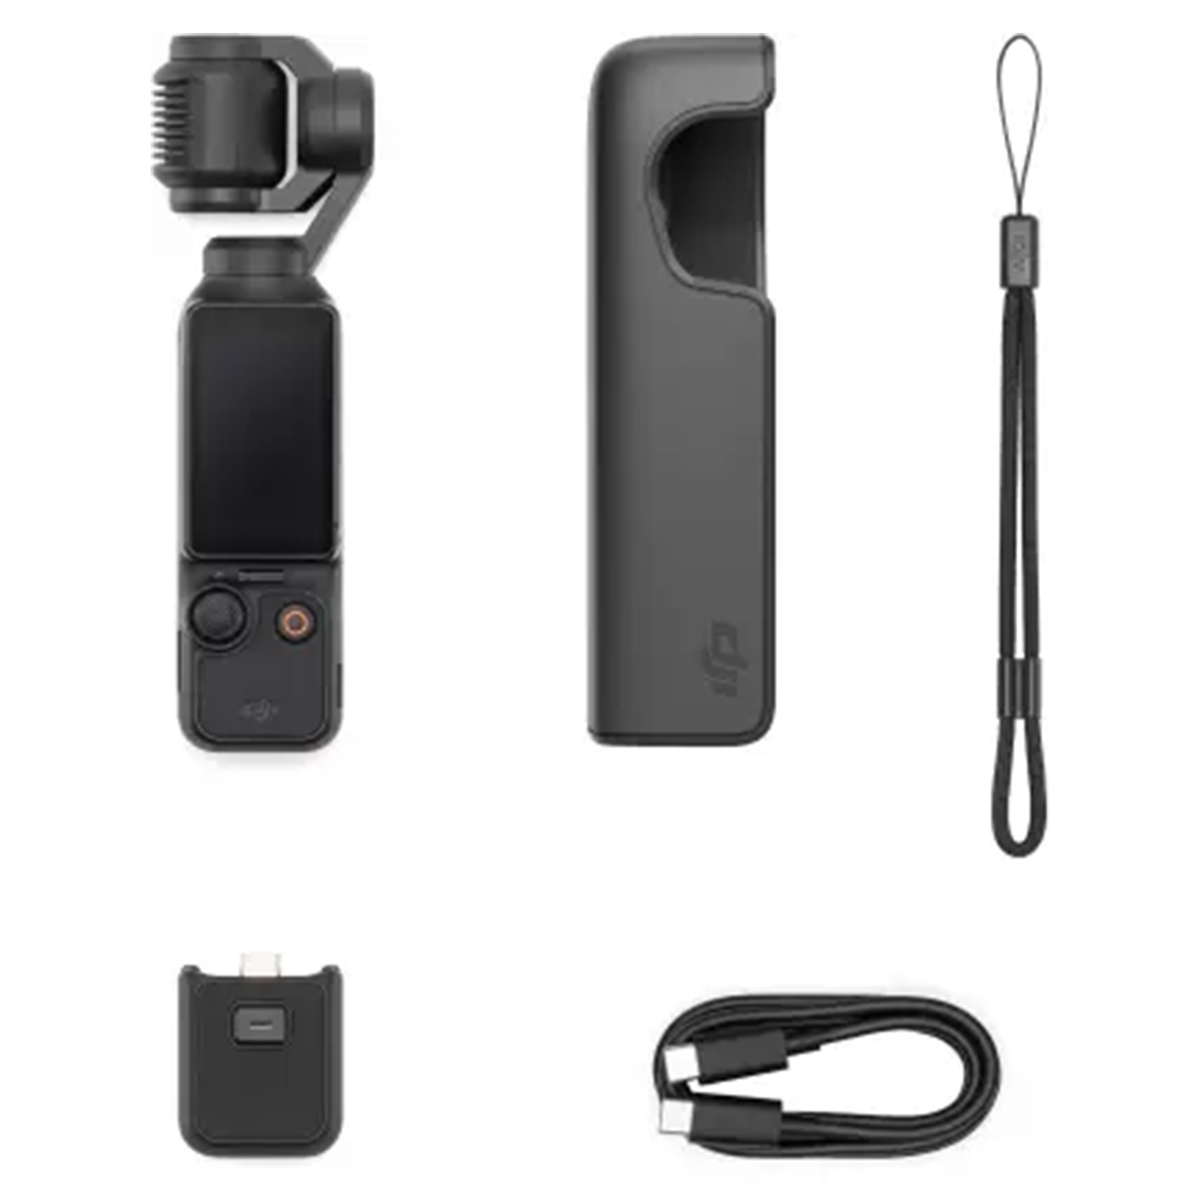 DJI Osmo Pocket 3 Action Camera, Black